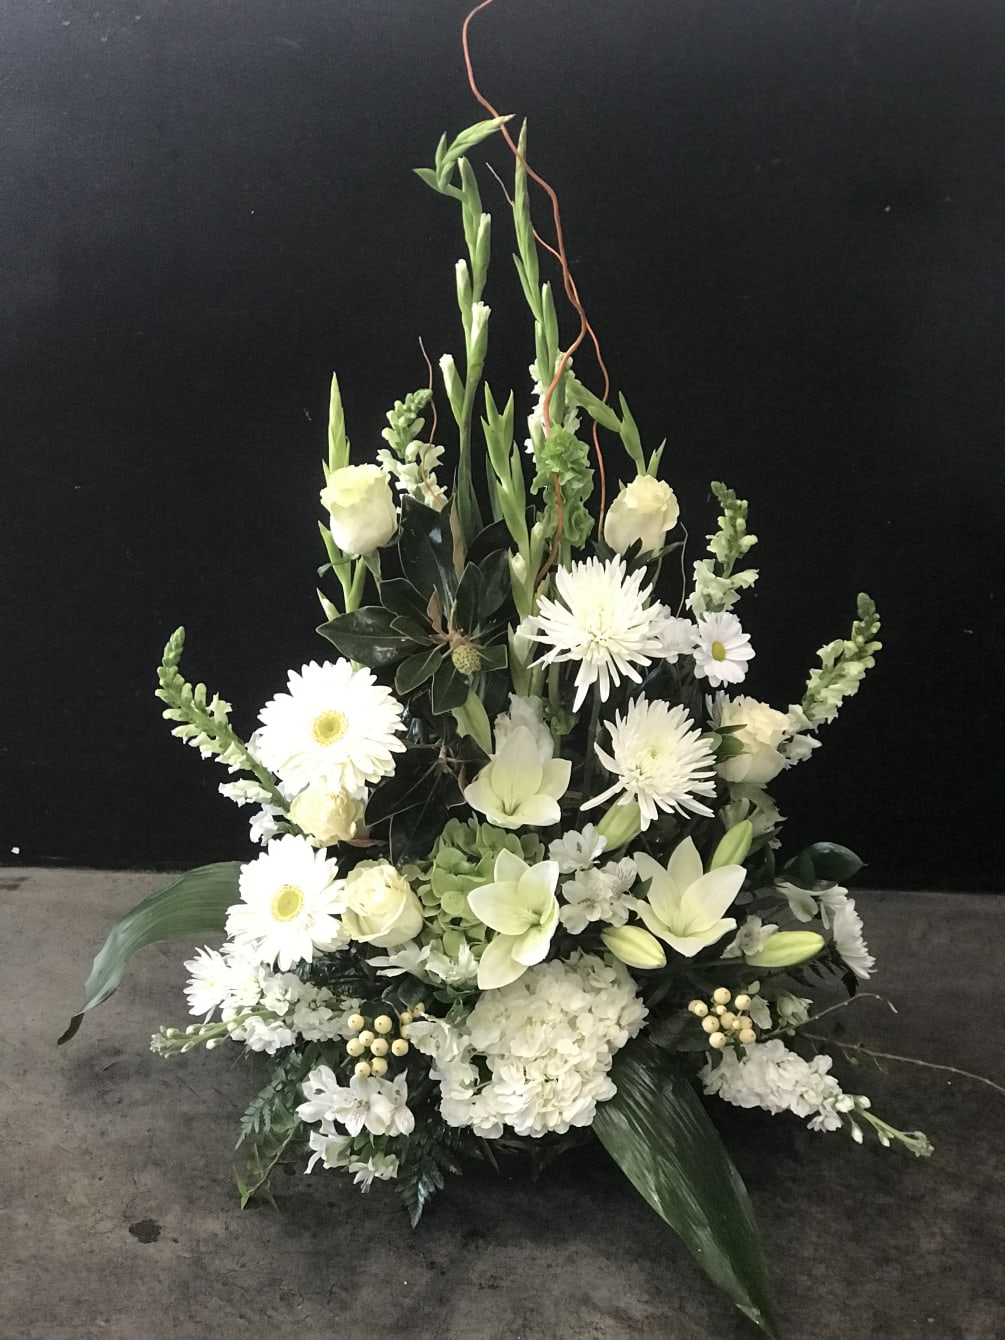 all white flowers arranged in a fan like basket for a funeral